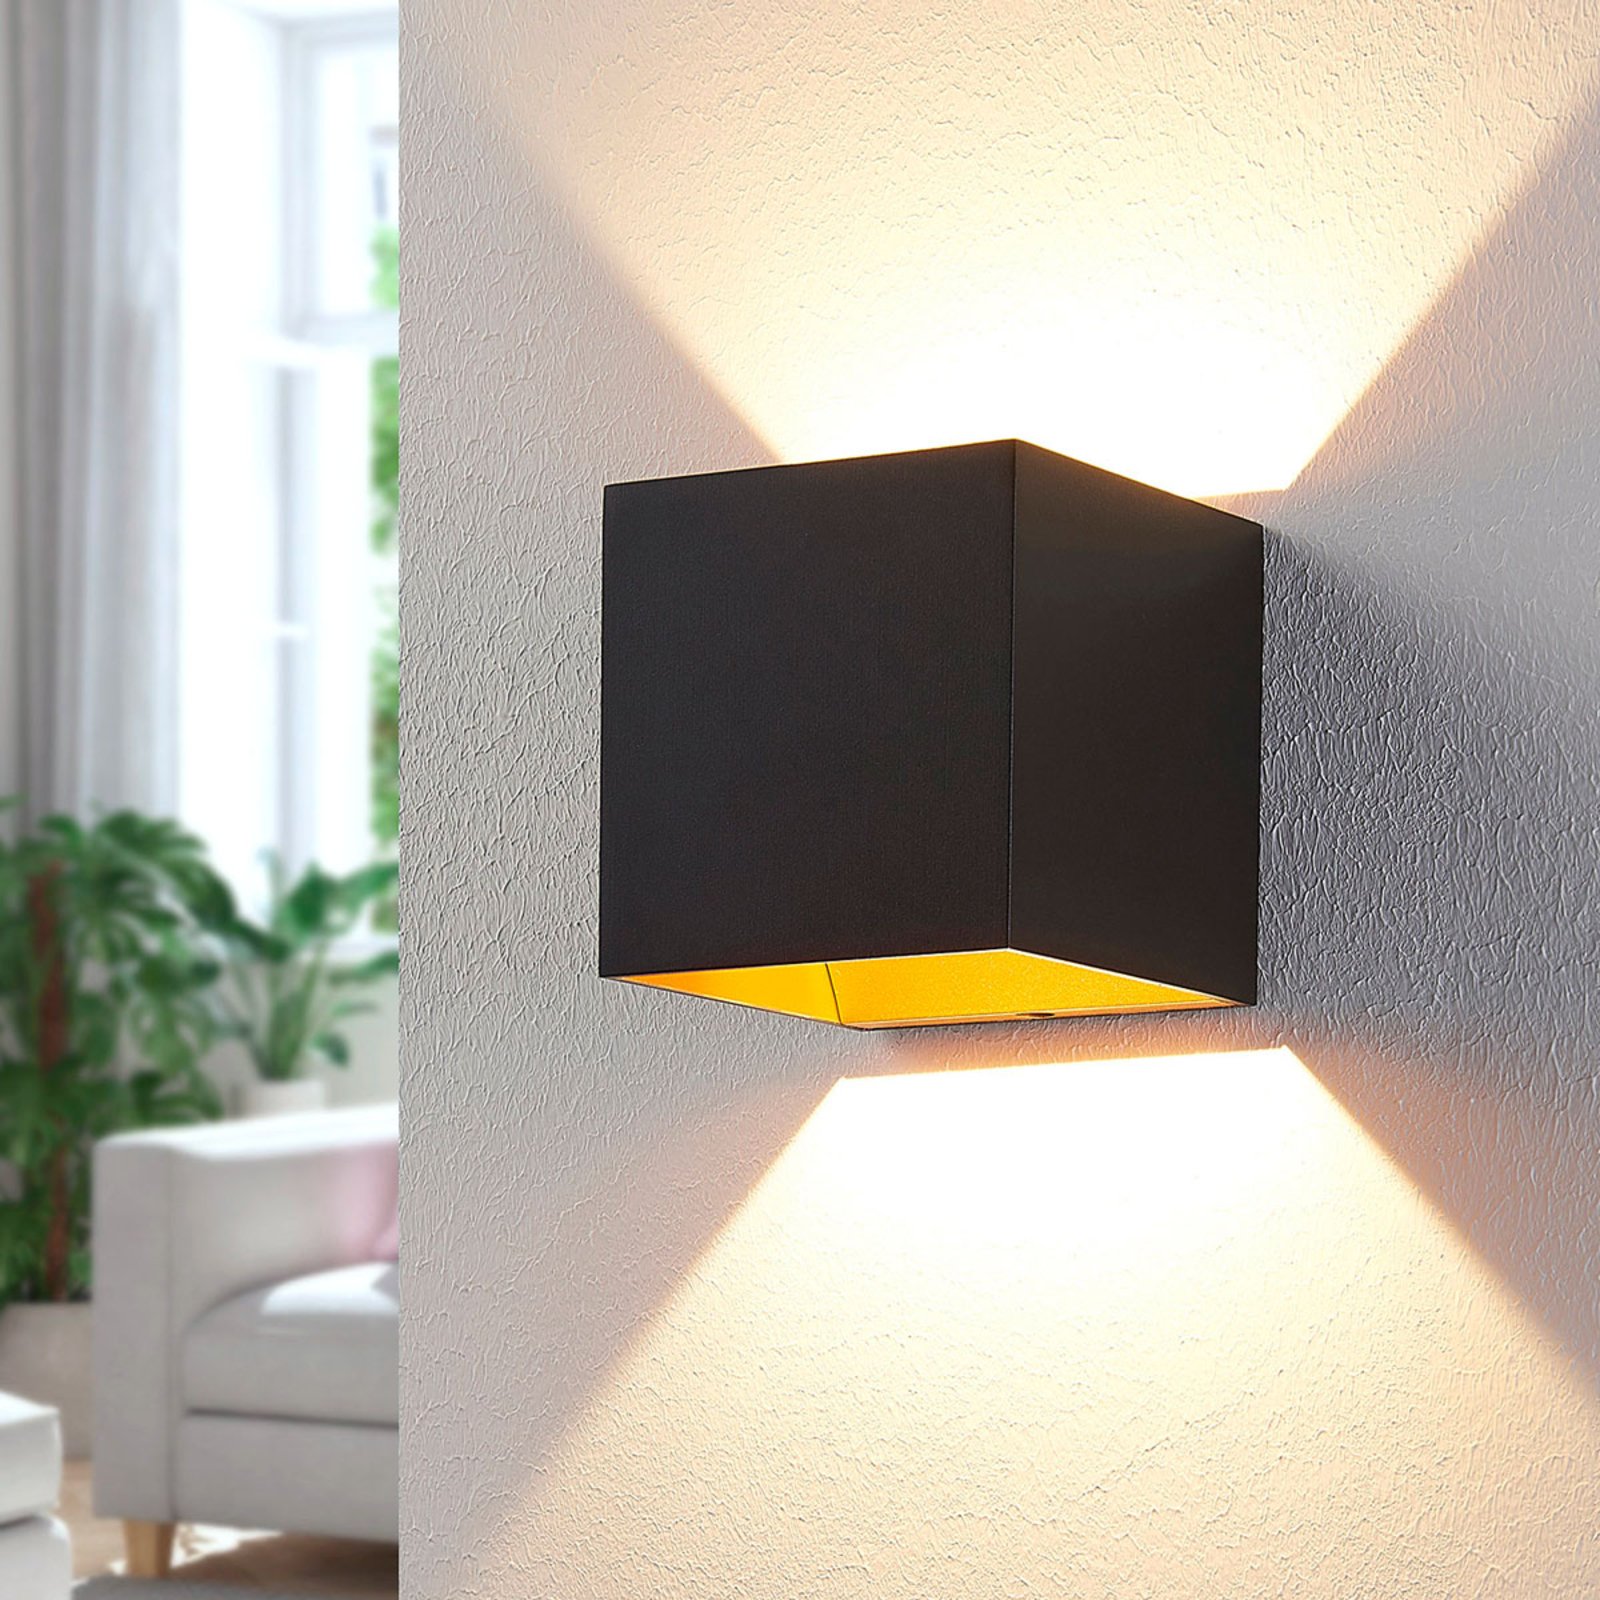 Briesje plannen riem Arcchio Aldrina LED wandlamp, kubus, zwart | Lampen24.nl